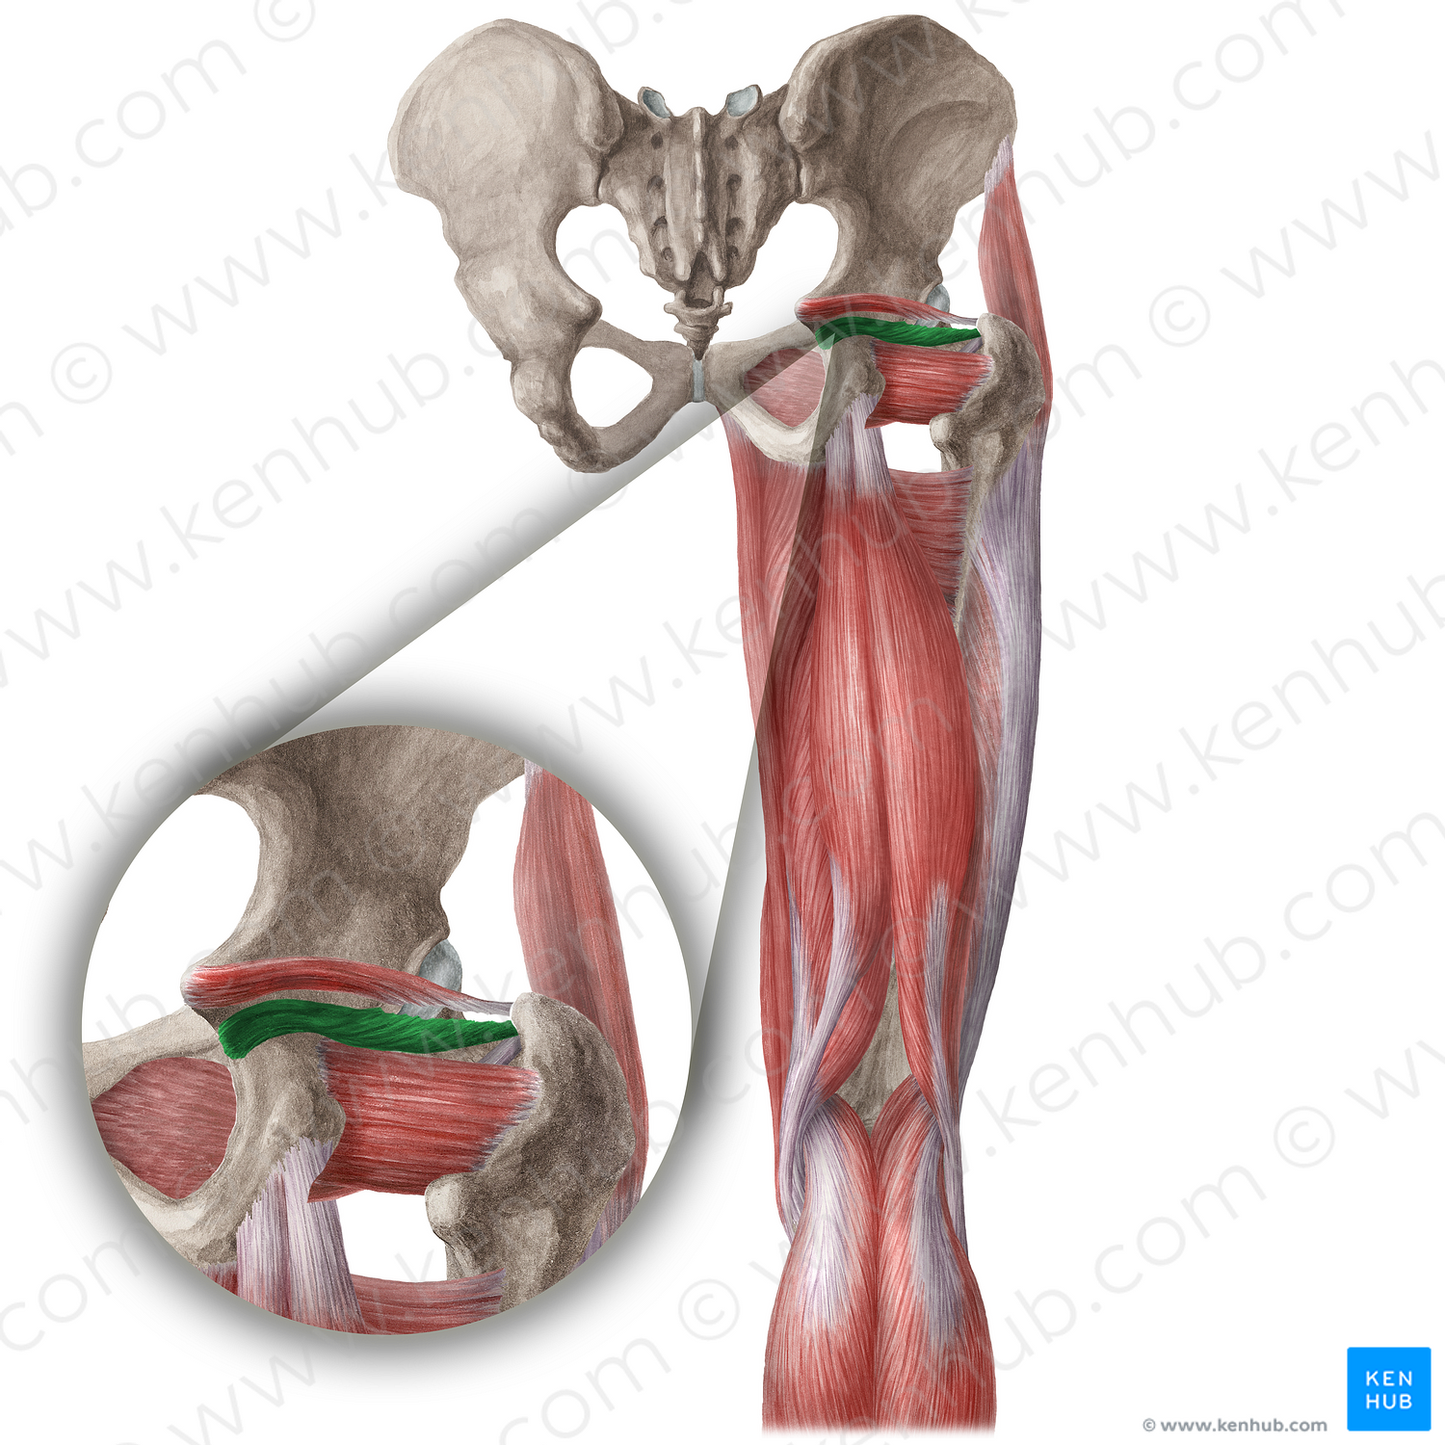 Inferior gemellus muscle (#5398)